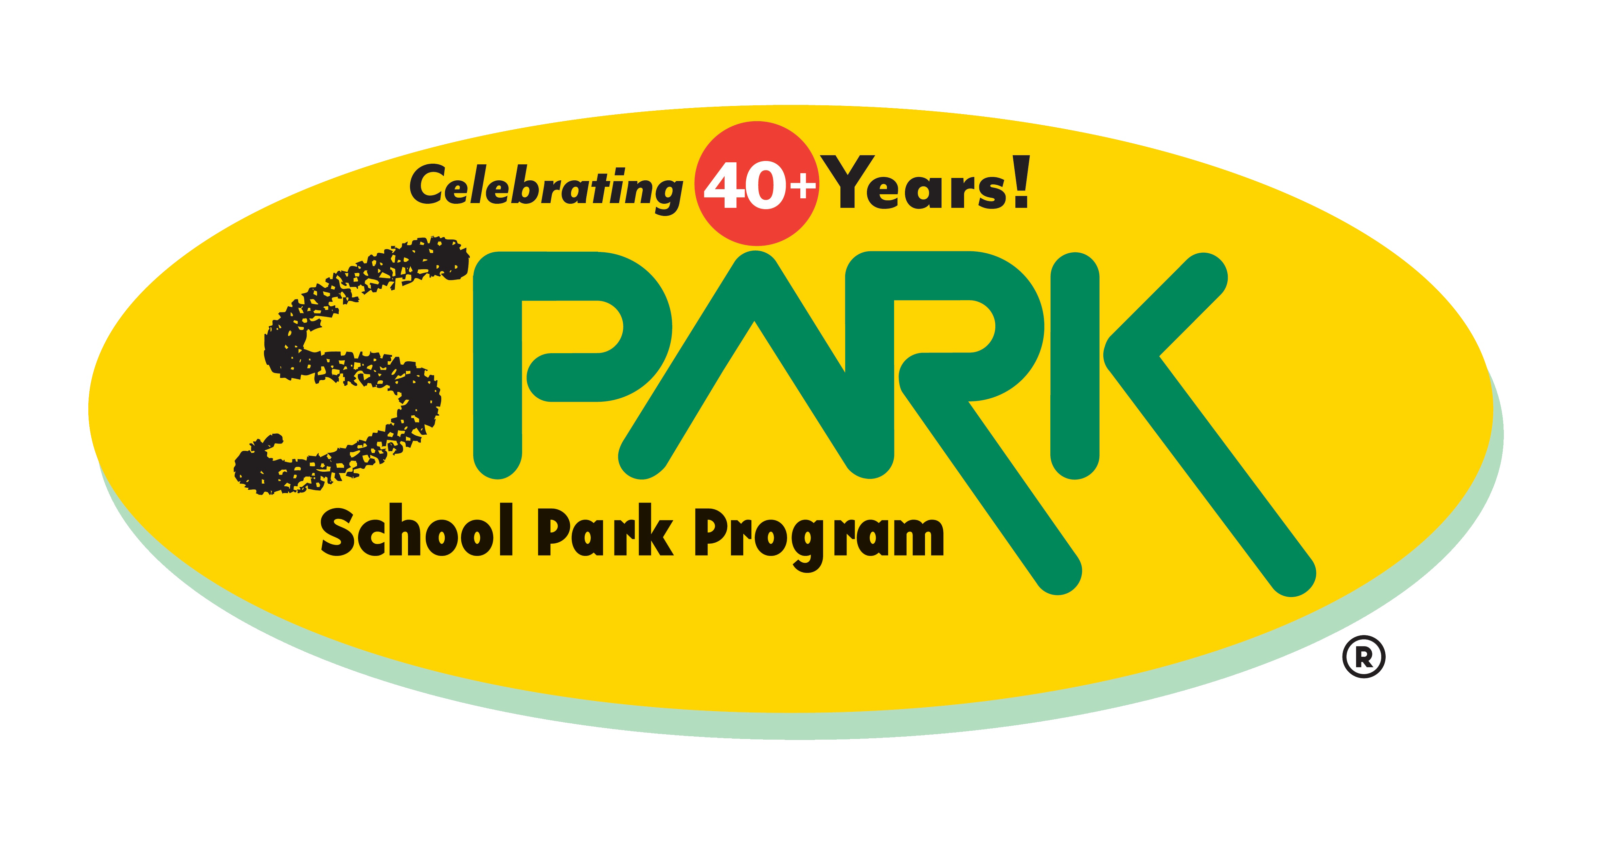 School Park Program